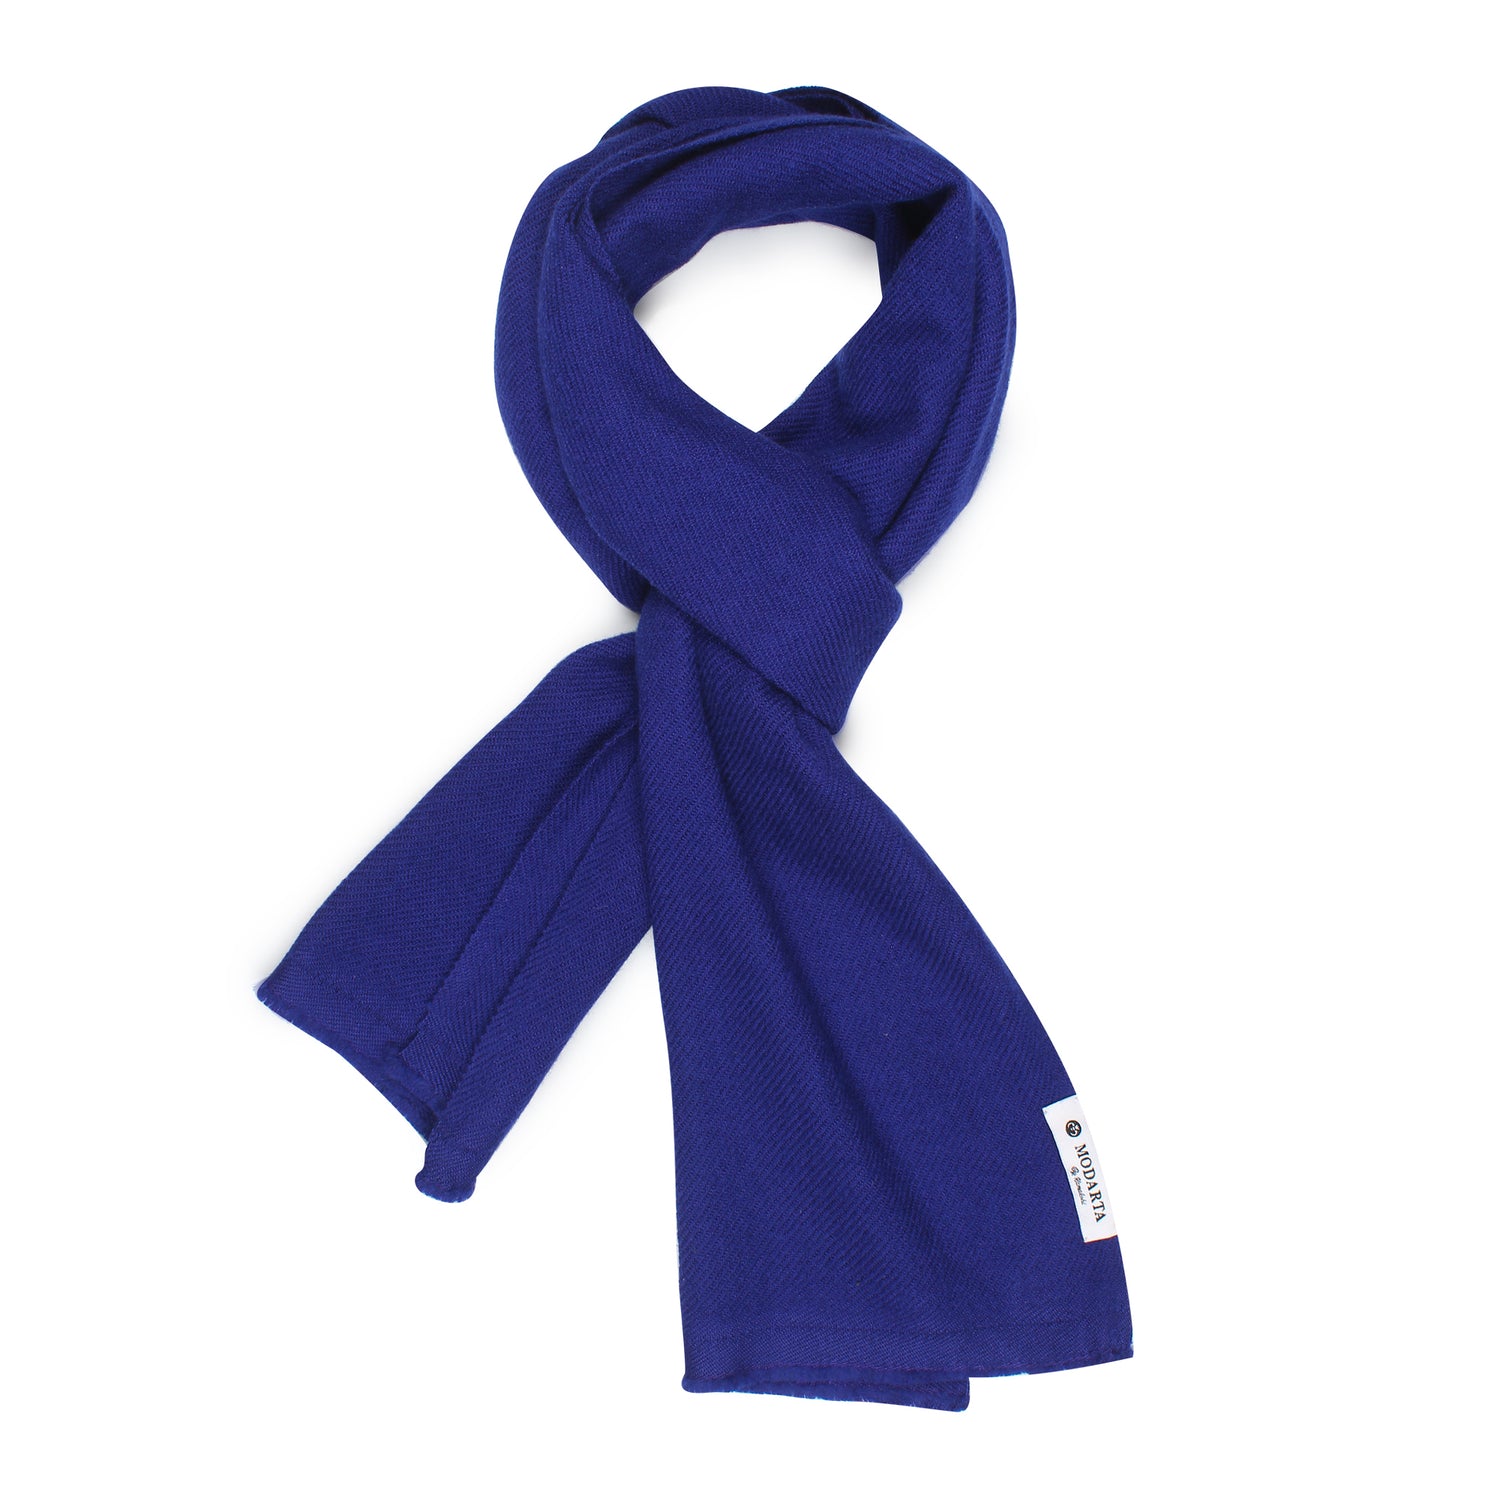 muffler scarf for men and male winter scarf by modarta